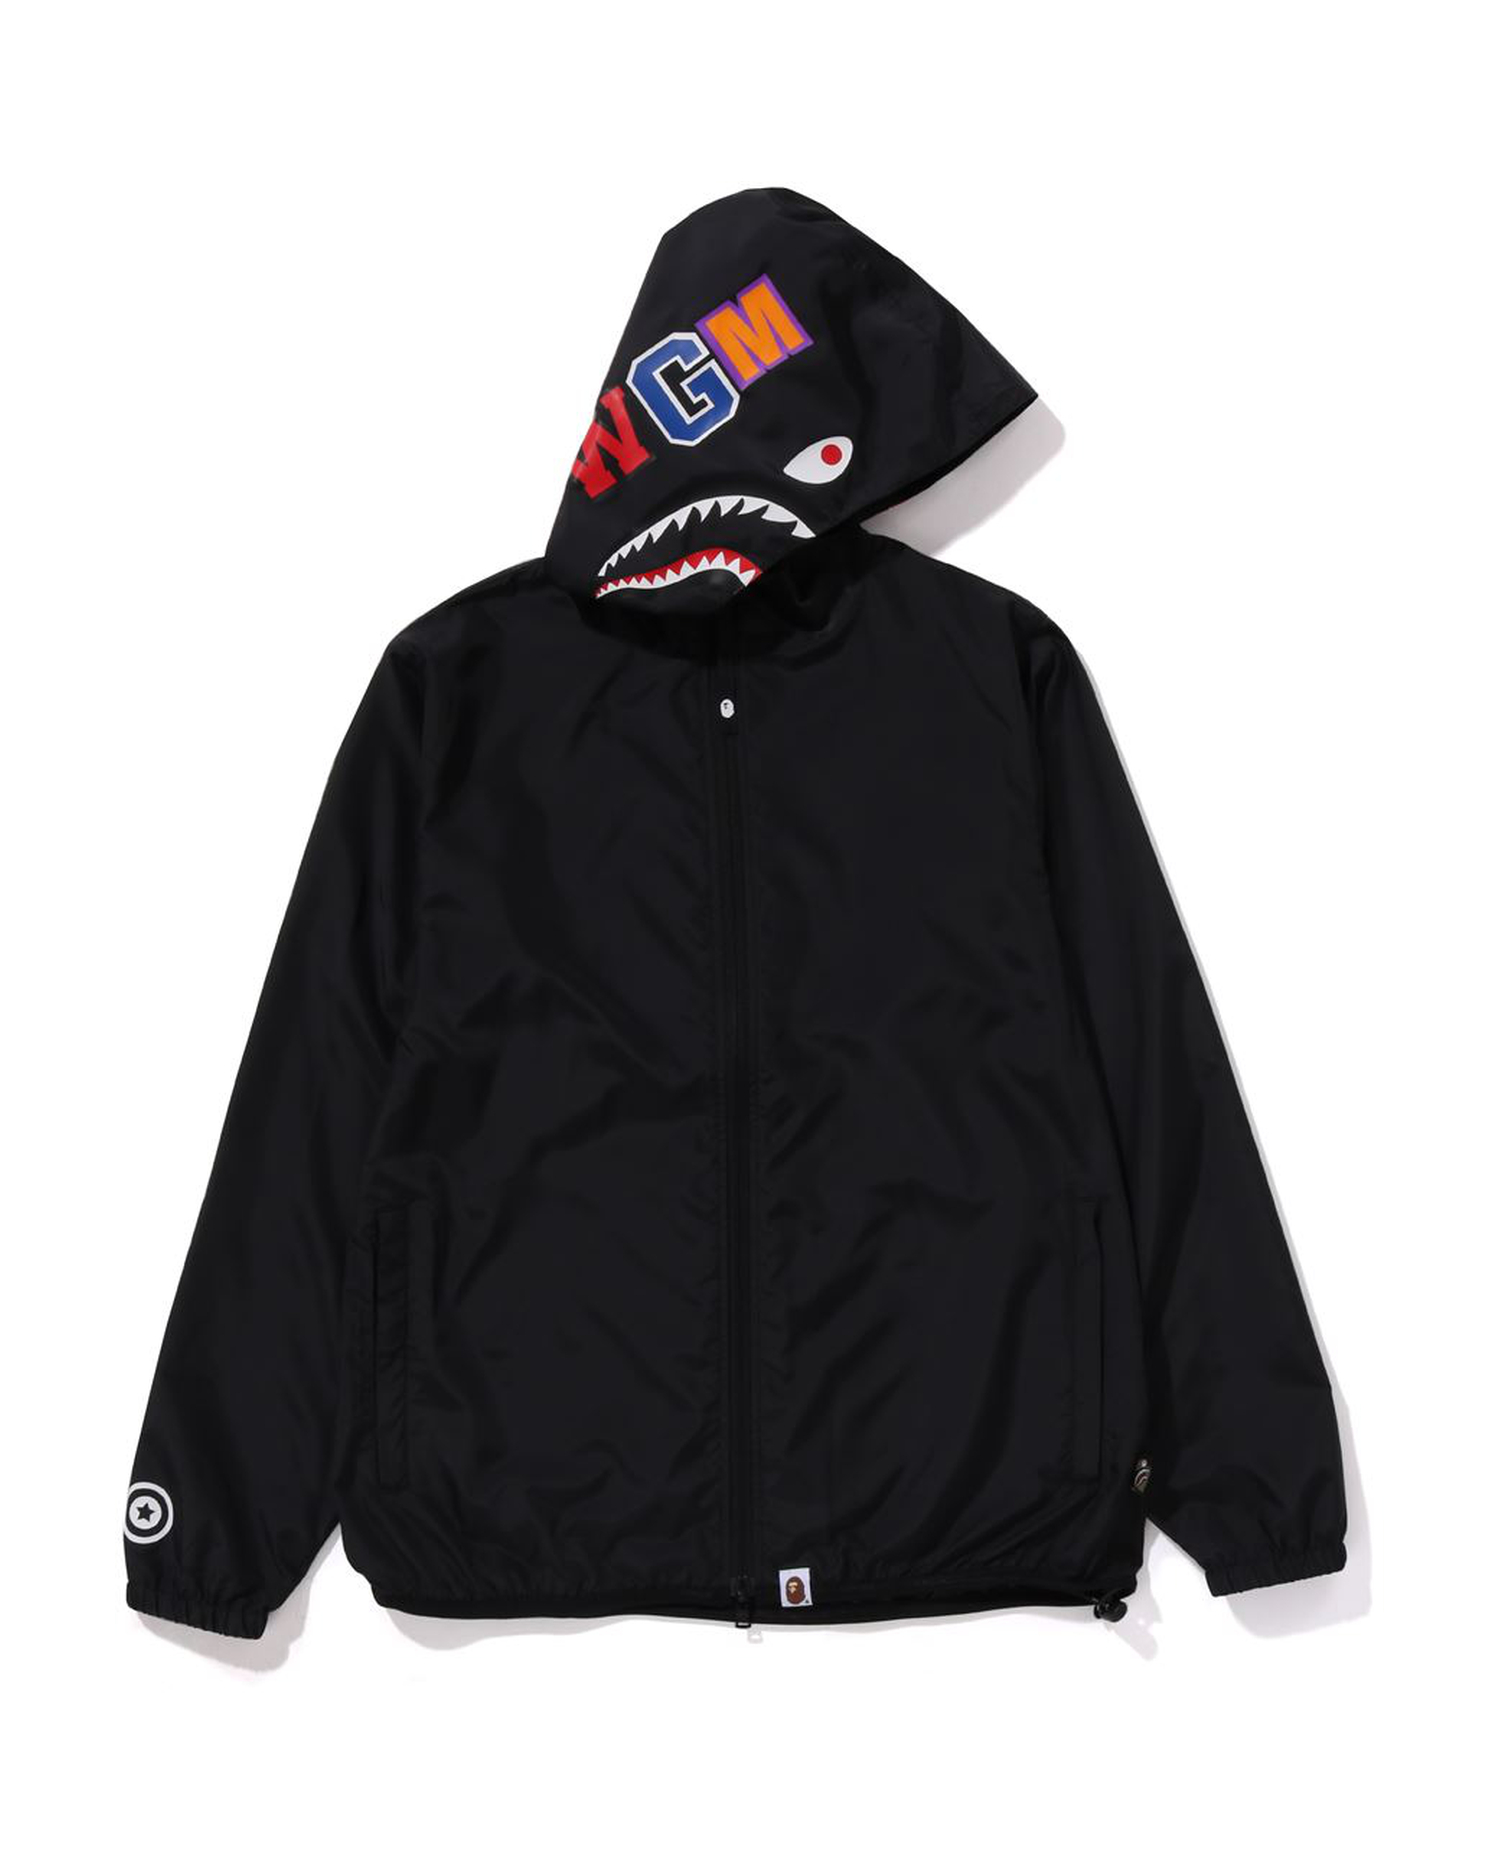 Bape Camo Shark Hoodie Jacket For Boys Girls Teen Youth Kids Hooded Zipper  Sweatshirt With Pocket Large - Walmart.com